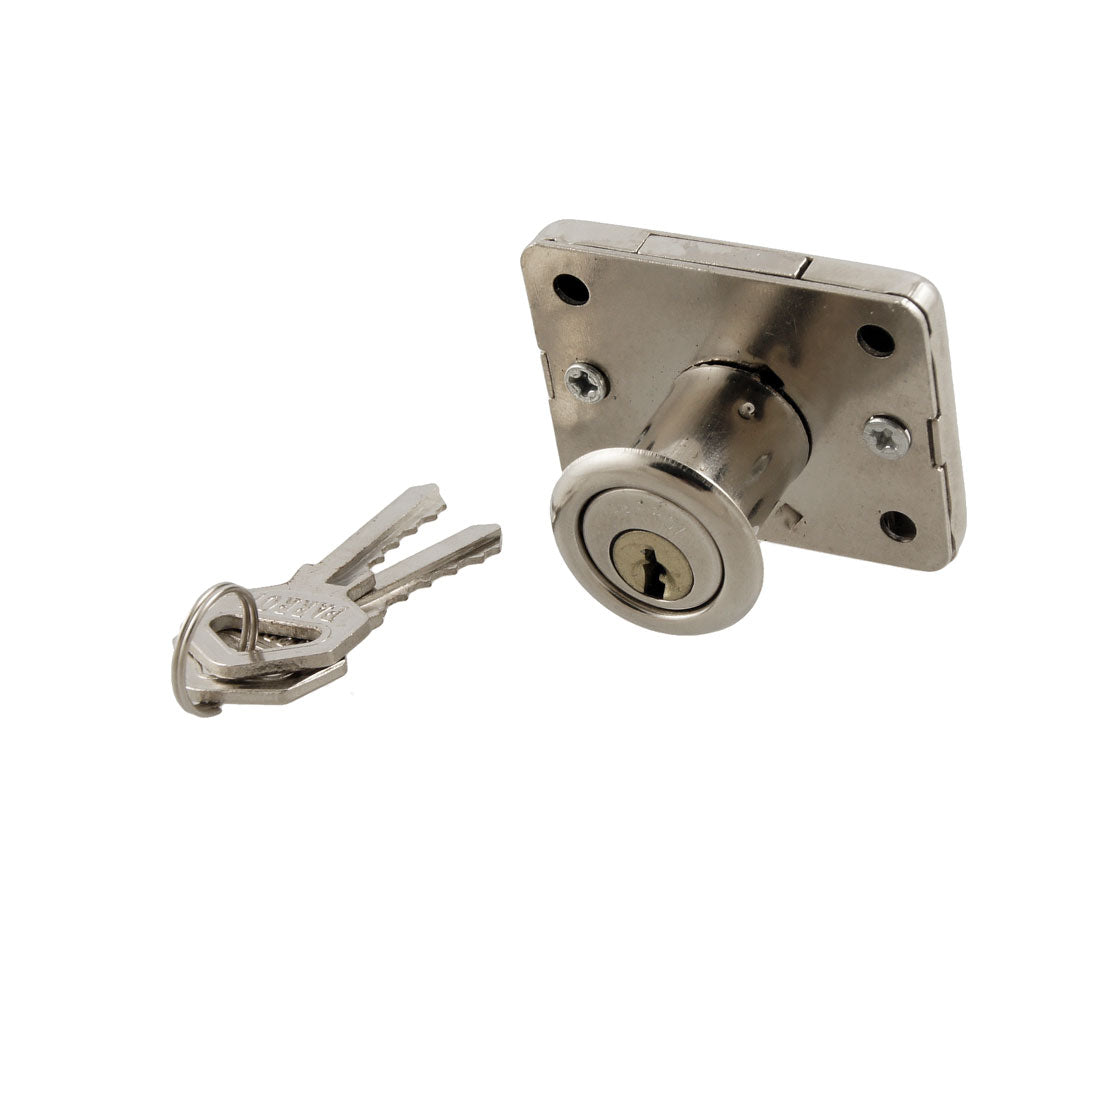 uxcell Uxcell Home Hardware Security Drawer Metal Deadbolt Locker Lock w 2 Keys